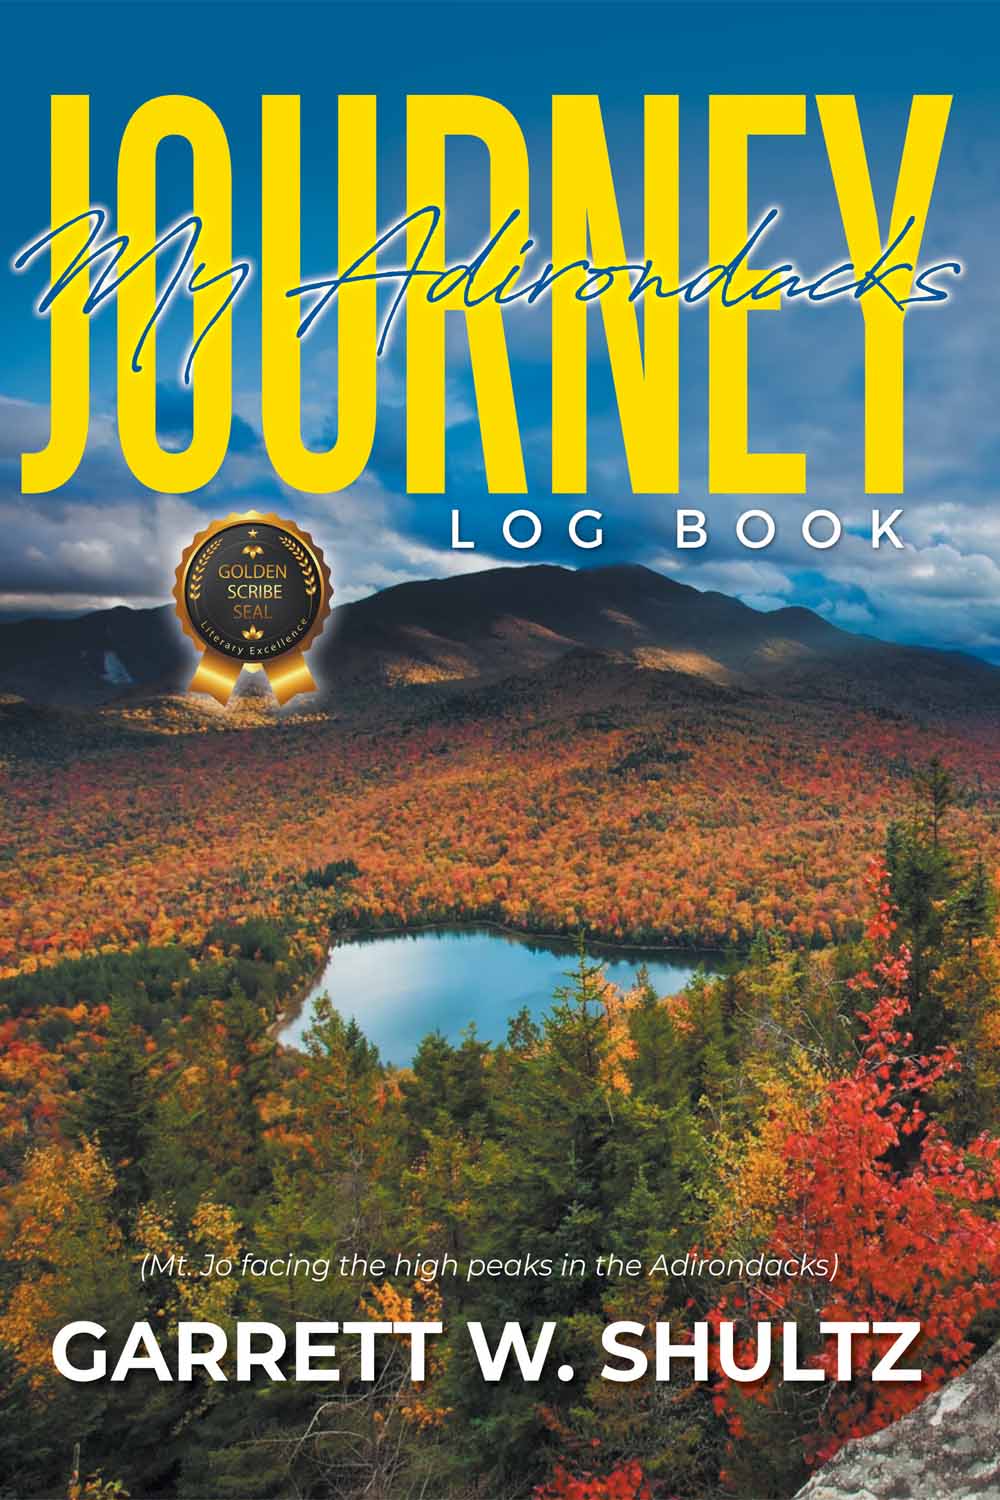 My Adirondacks Journey: Log Book